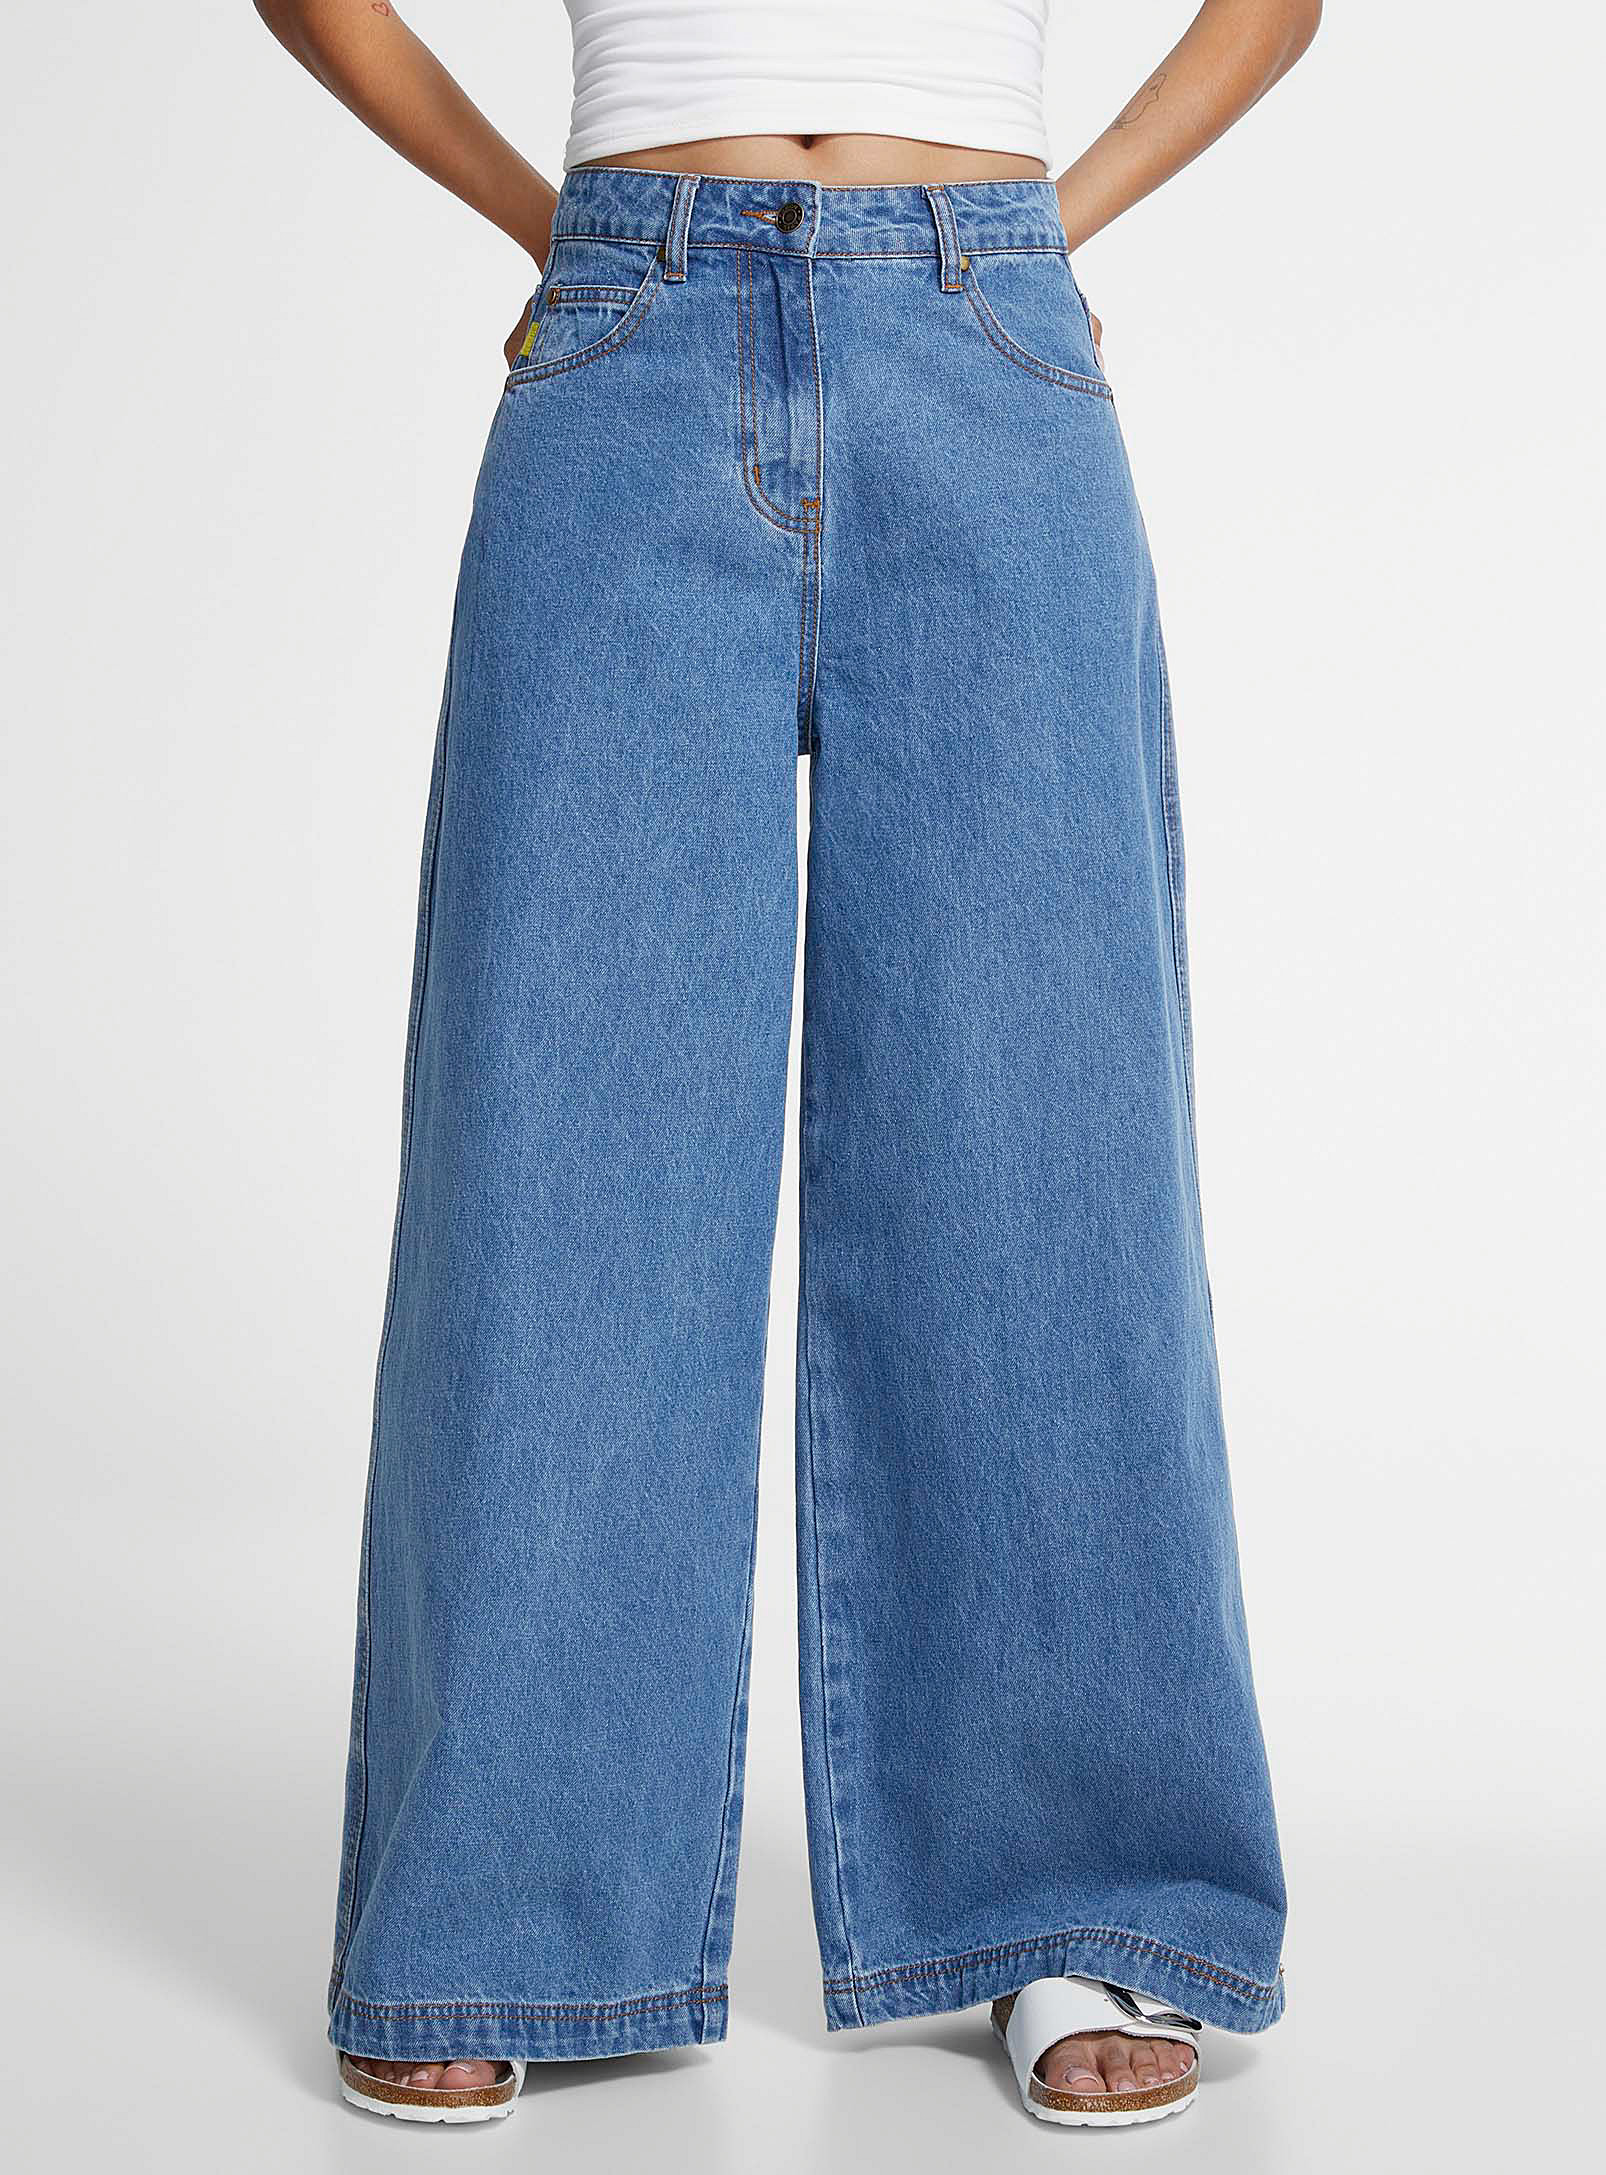 FRNCH - Pantalon Le Jean large Nadeja indigo pâle